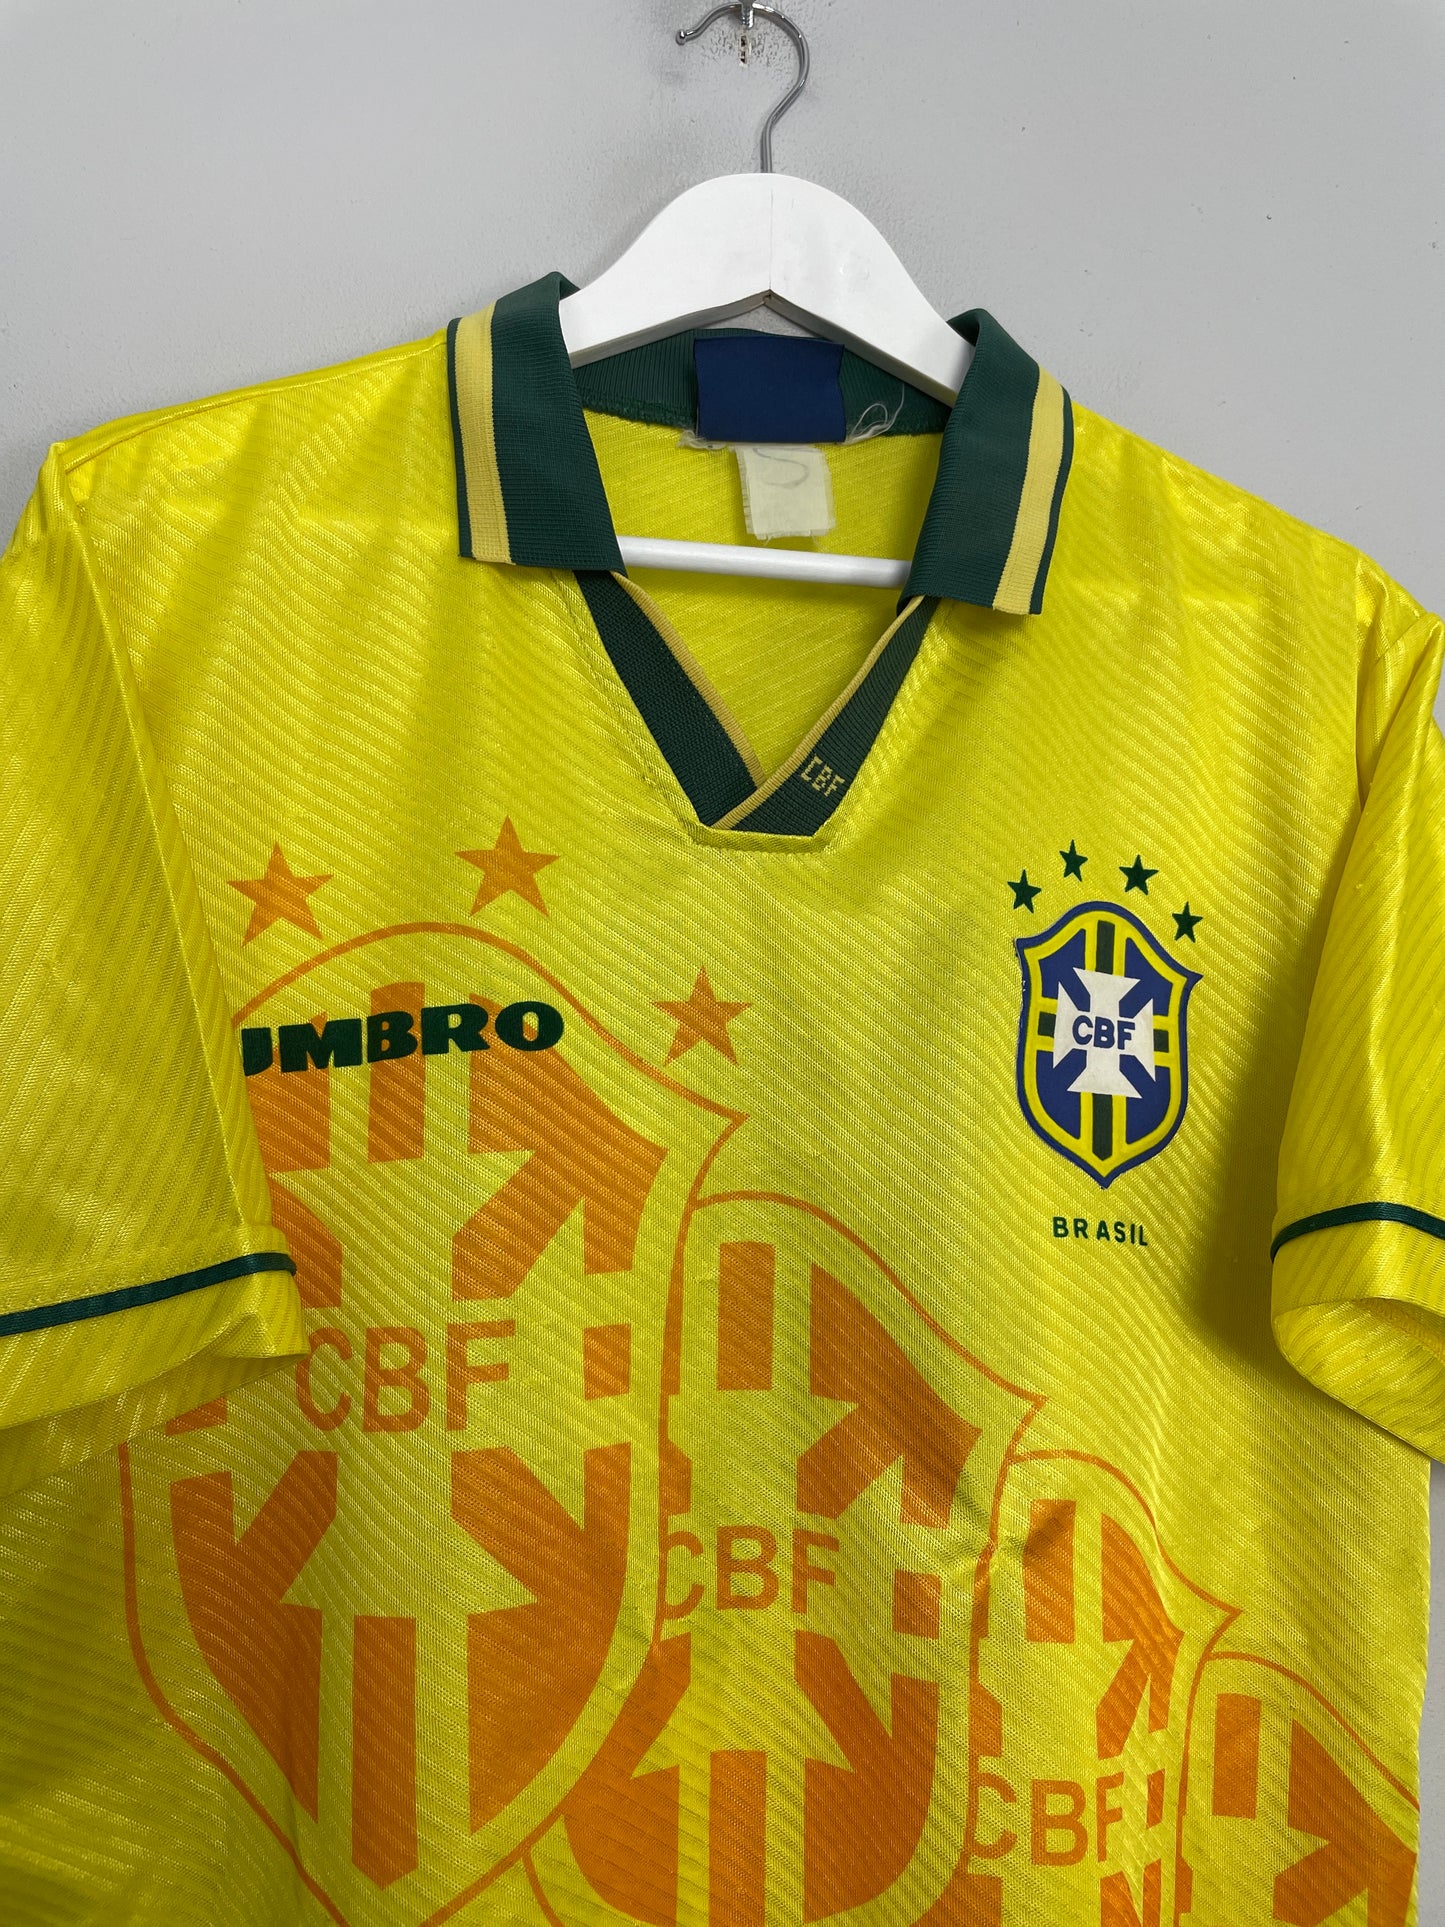 1994/96 BRAZIL #10 HOME SHIRT (L) UMBRO